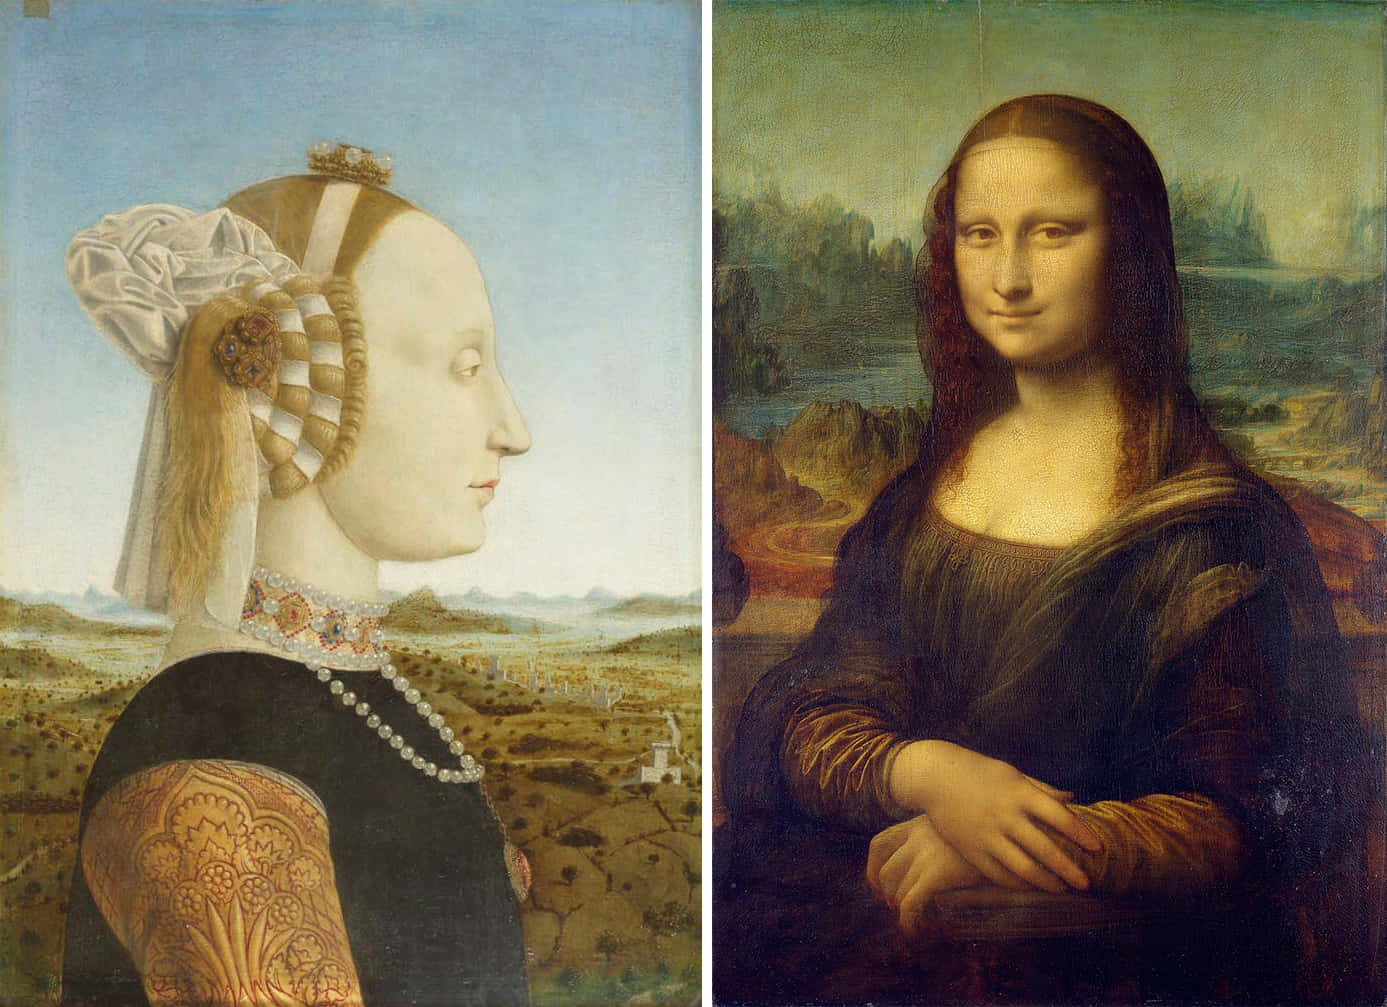 The Iconic Mona Lisa, painted by Leonardo da Vinci